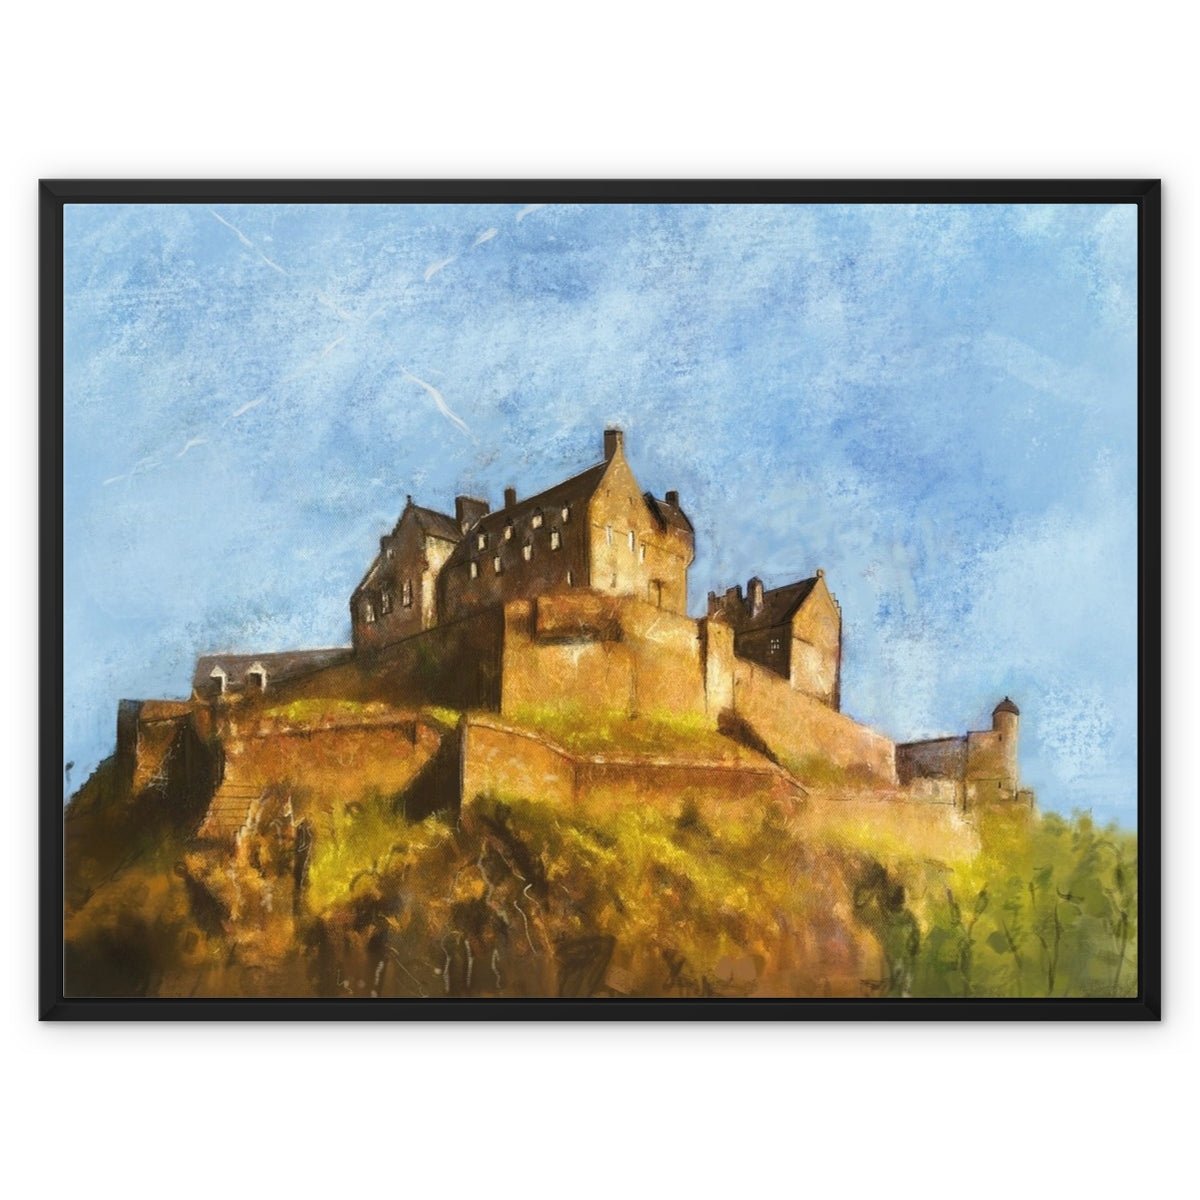 Edinburgh Castle Painting | Framed Canvas From Scotland-Floating Framed Canvas Prints-Historic & Iconic Scotland Art Gallery-32"x24"-Black Frame-Paintings, Prints, Homeware, Art Gifts From Scotland By Scottish Artist Kevin Hunter